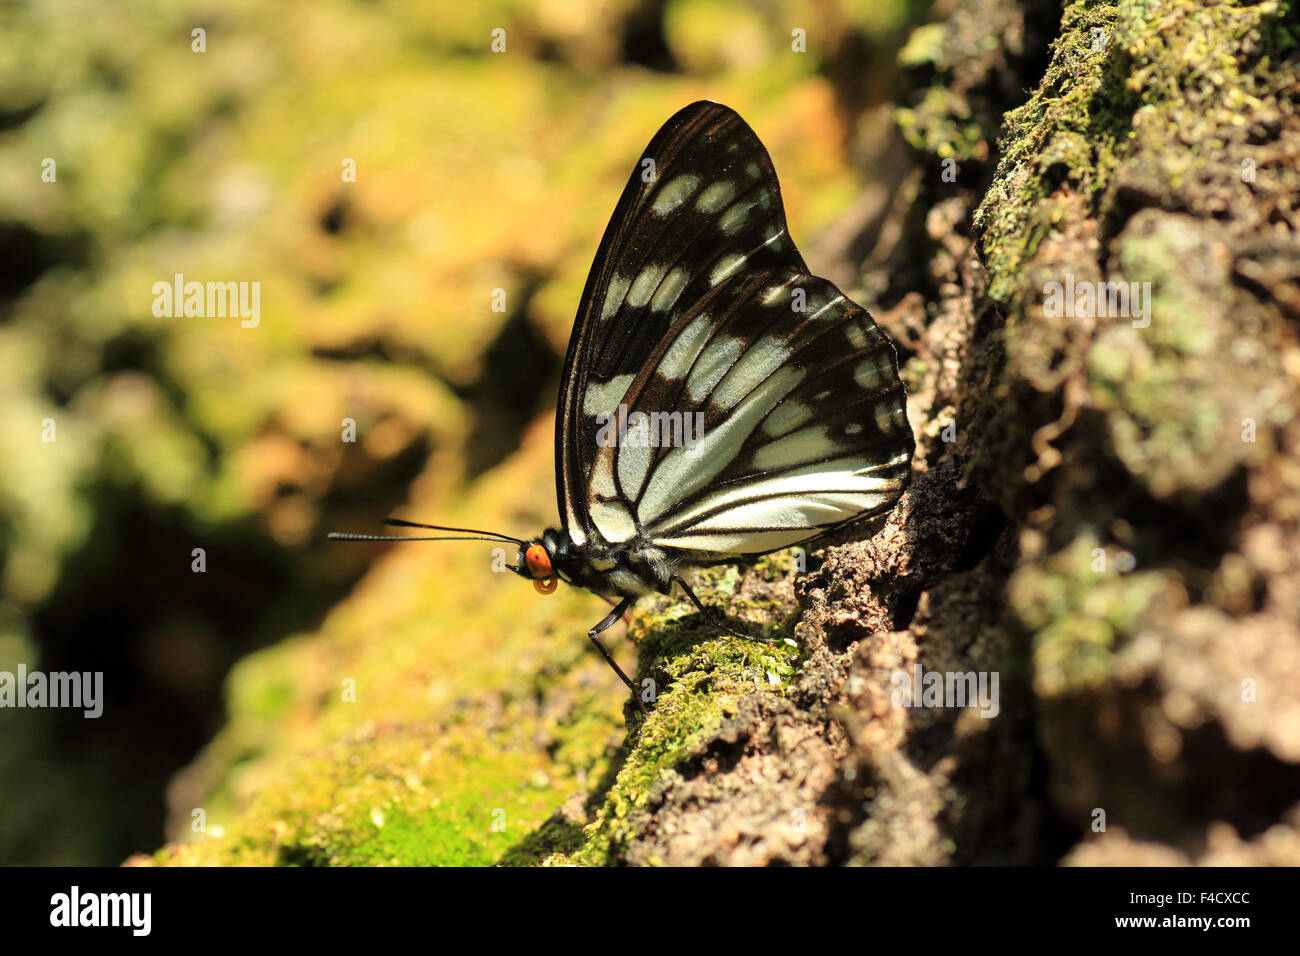 Bộ sưu tập cánh vẩy 4 - Page 6 Siren-butterfly-hestina-persimilis-japonica-in-japan-F4CXCC